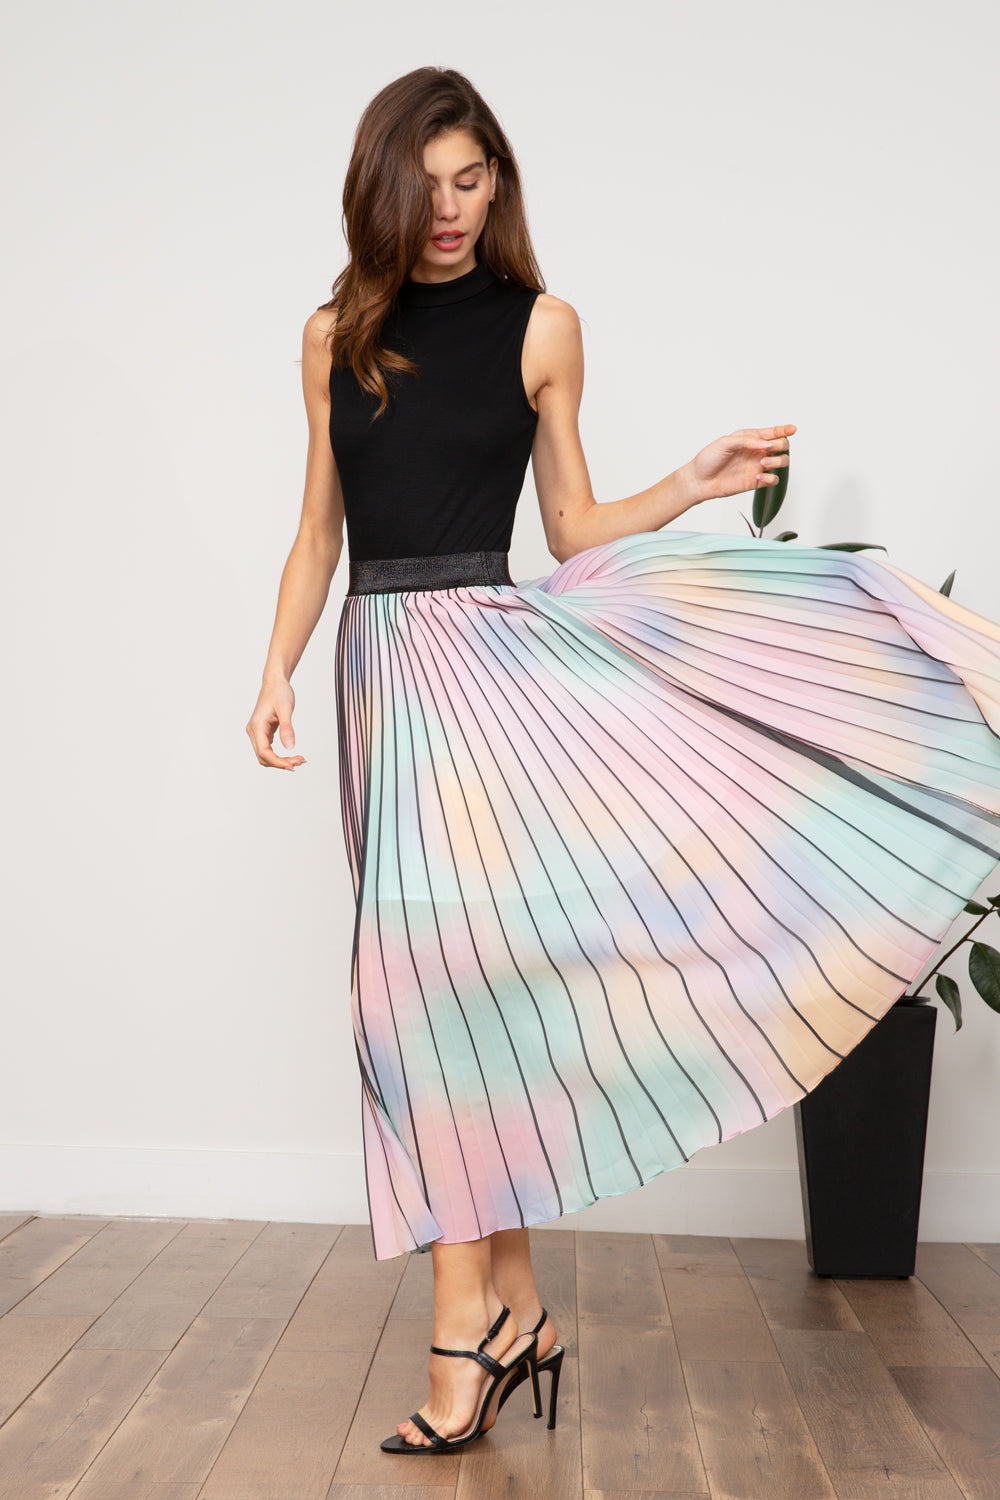 LUCY PARIS - Bernice Rainbow Skirt 